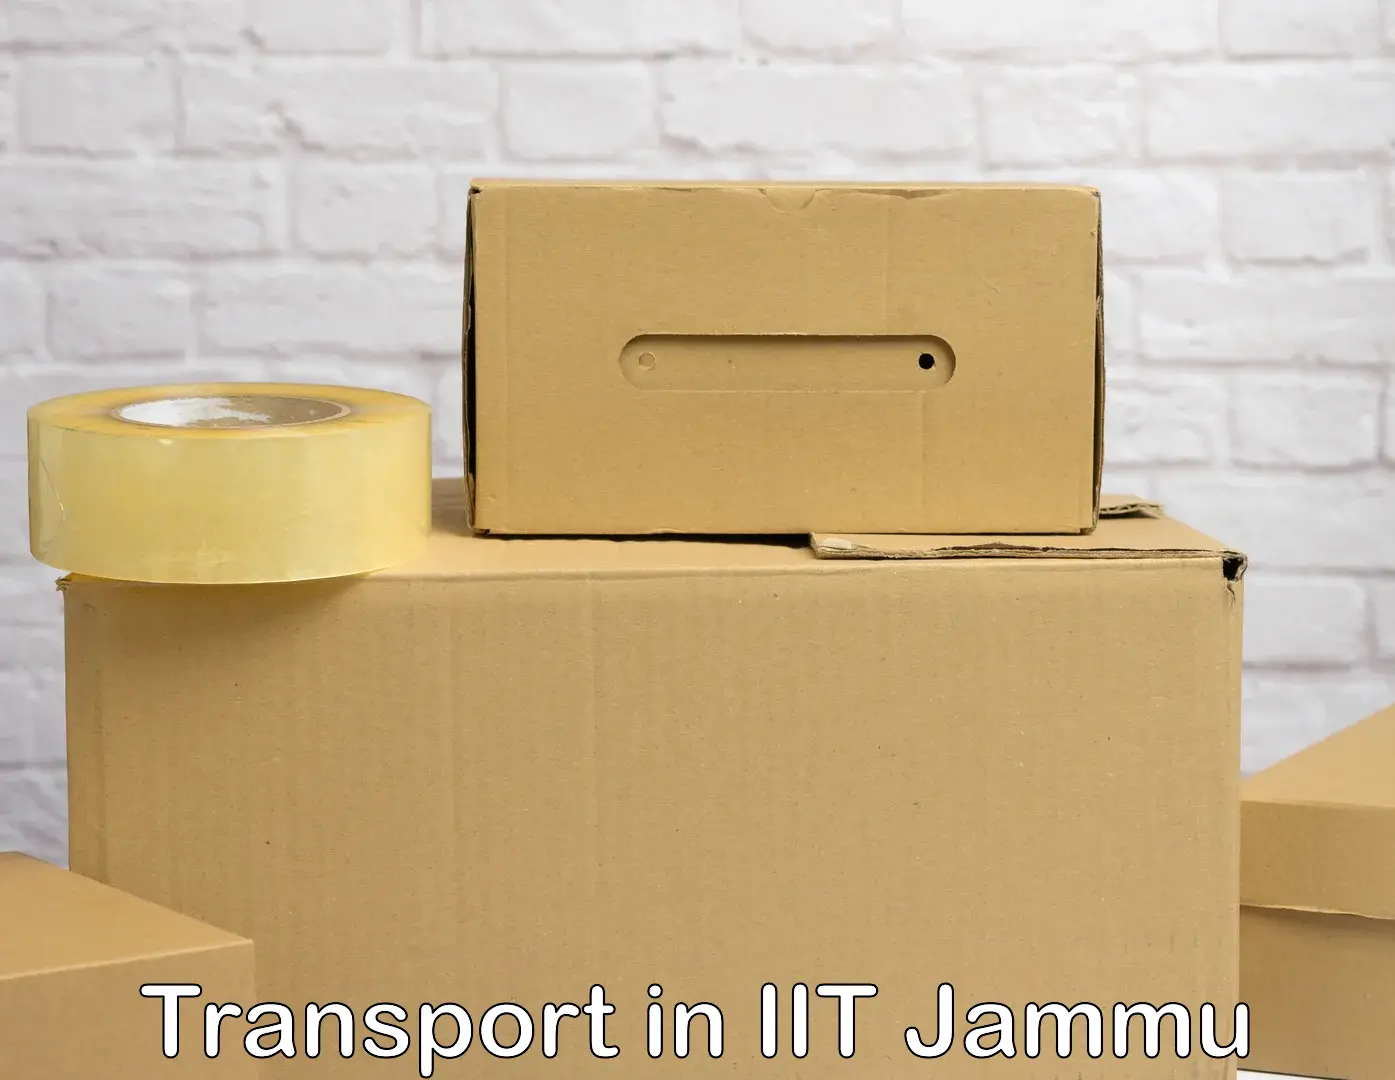 Bike transfer in IIT Jammu